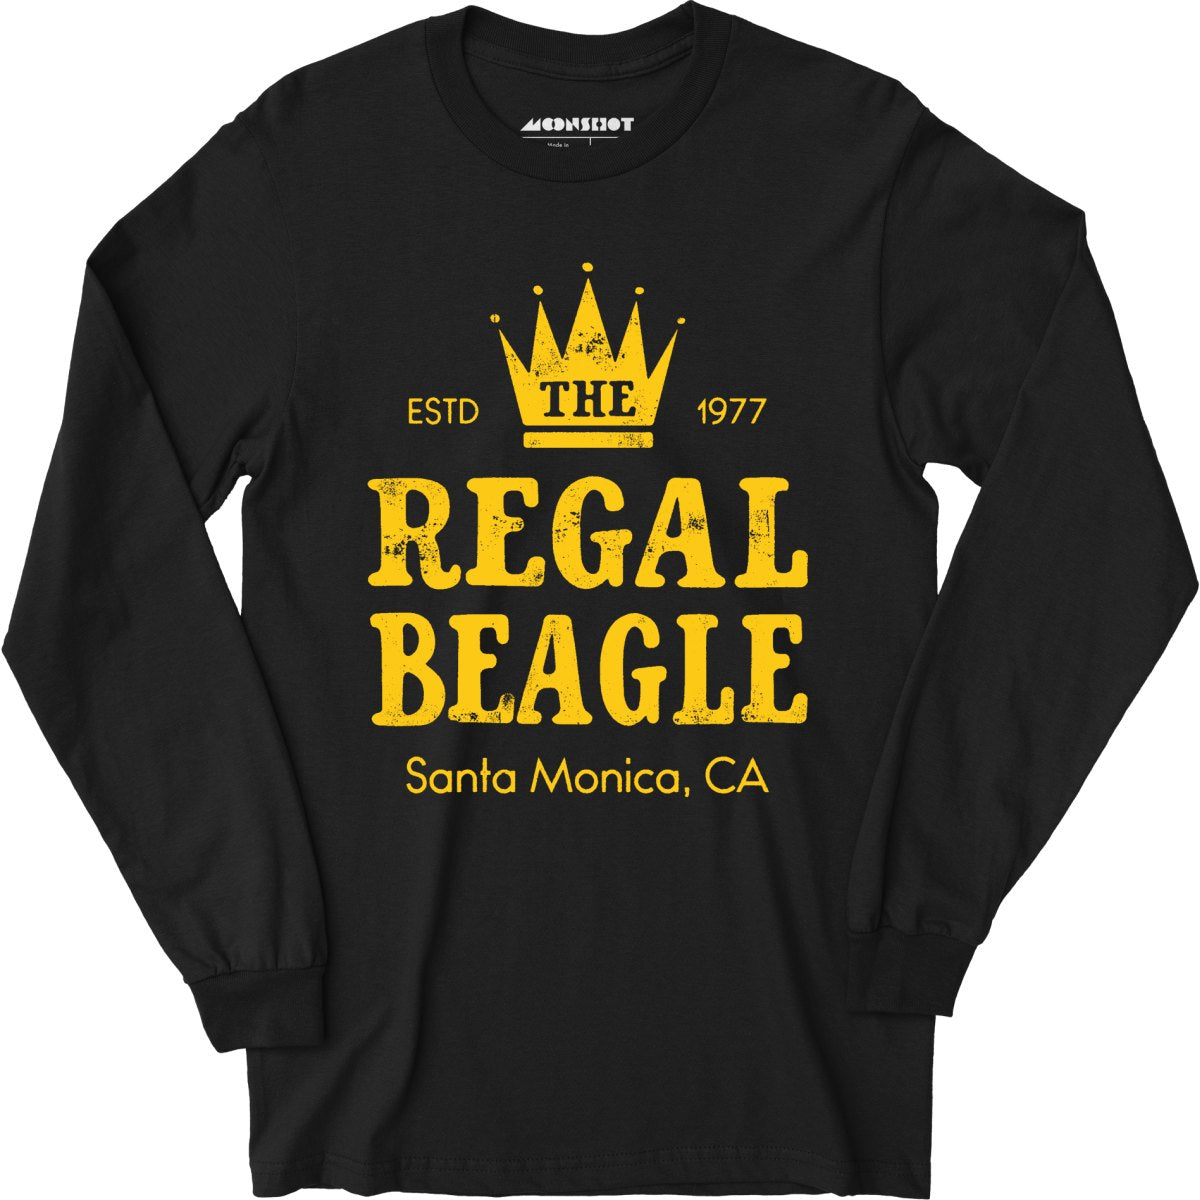 The Regal Beagle - Santa Monica, CA - Long Sleeve T-Shirt